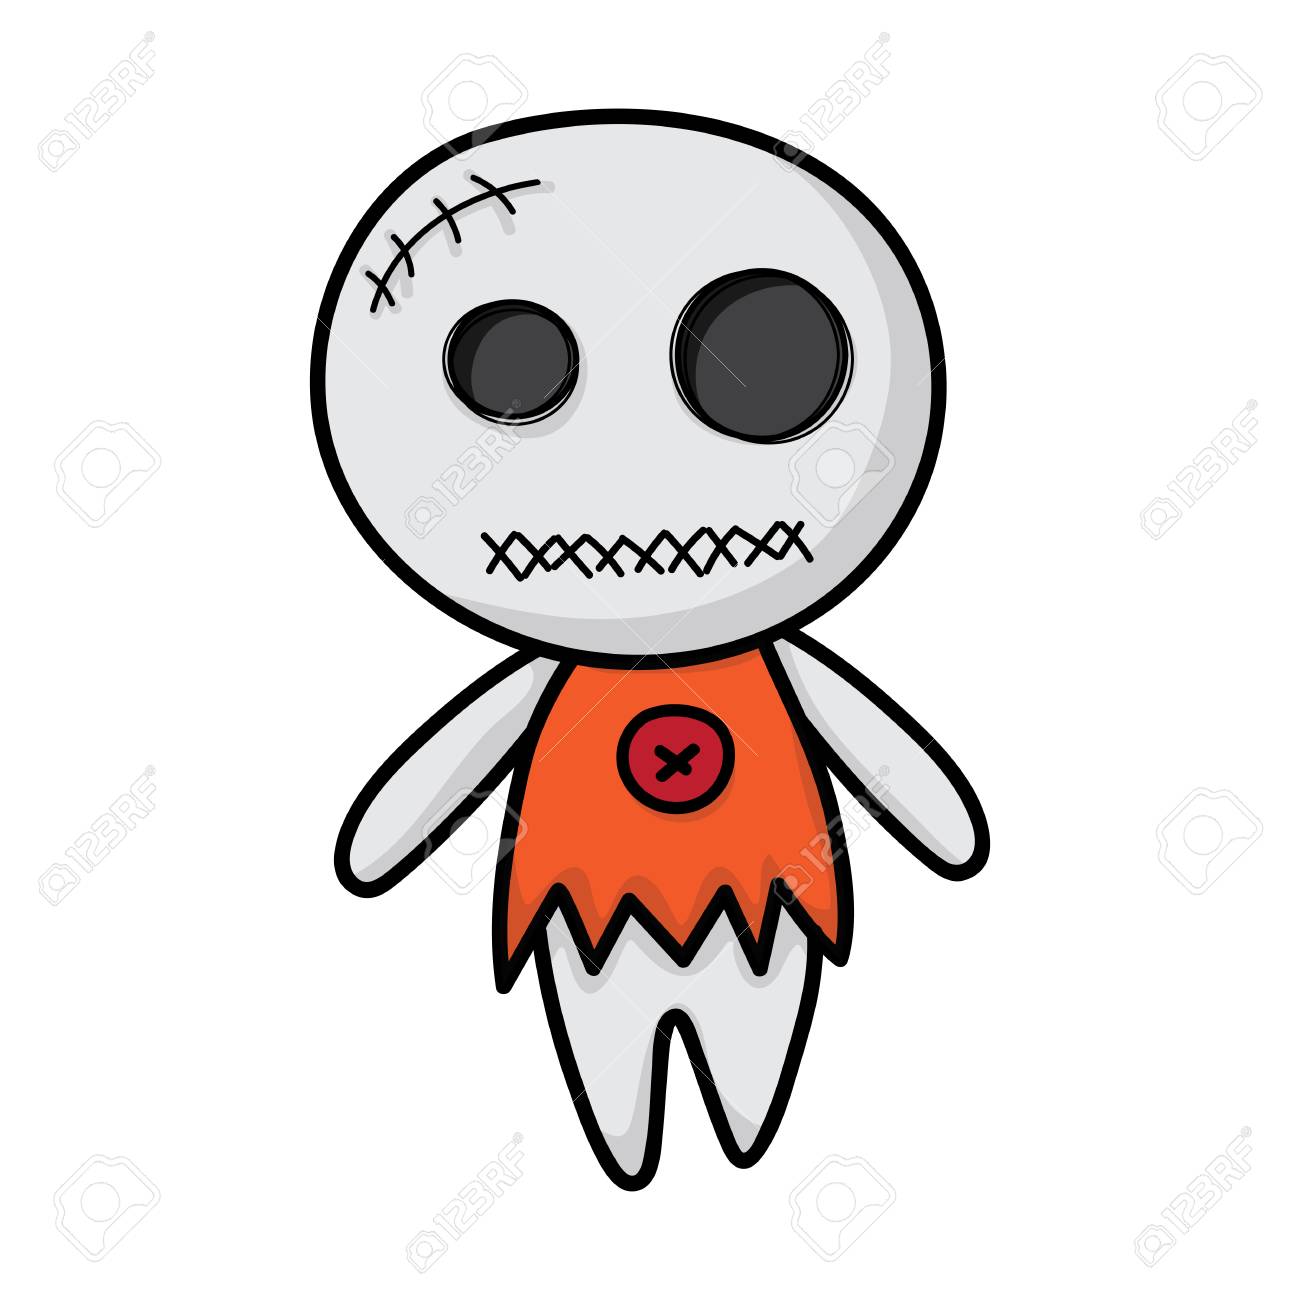 Voodoo doll isolated icon symbol design vector illustration.